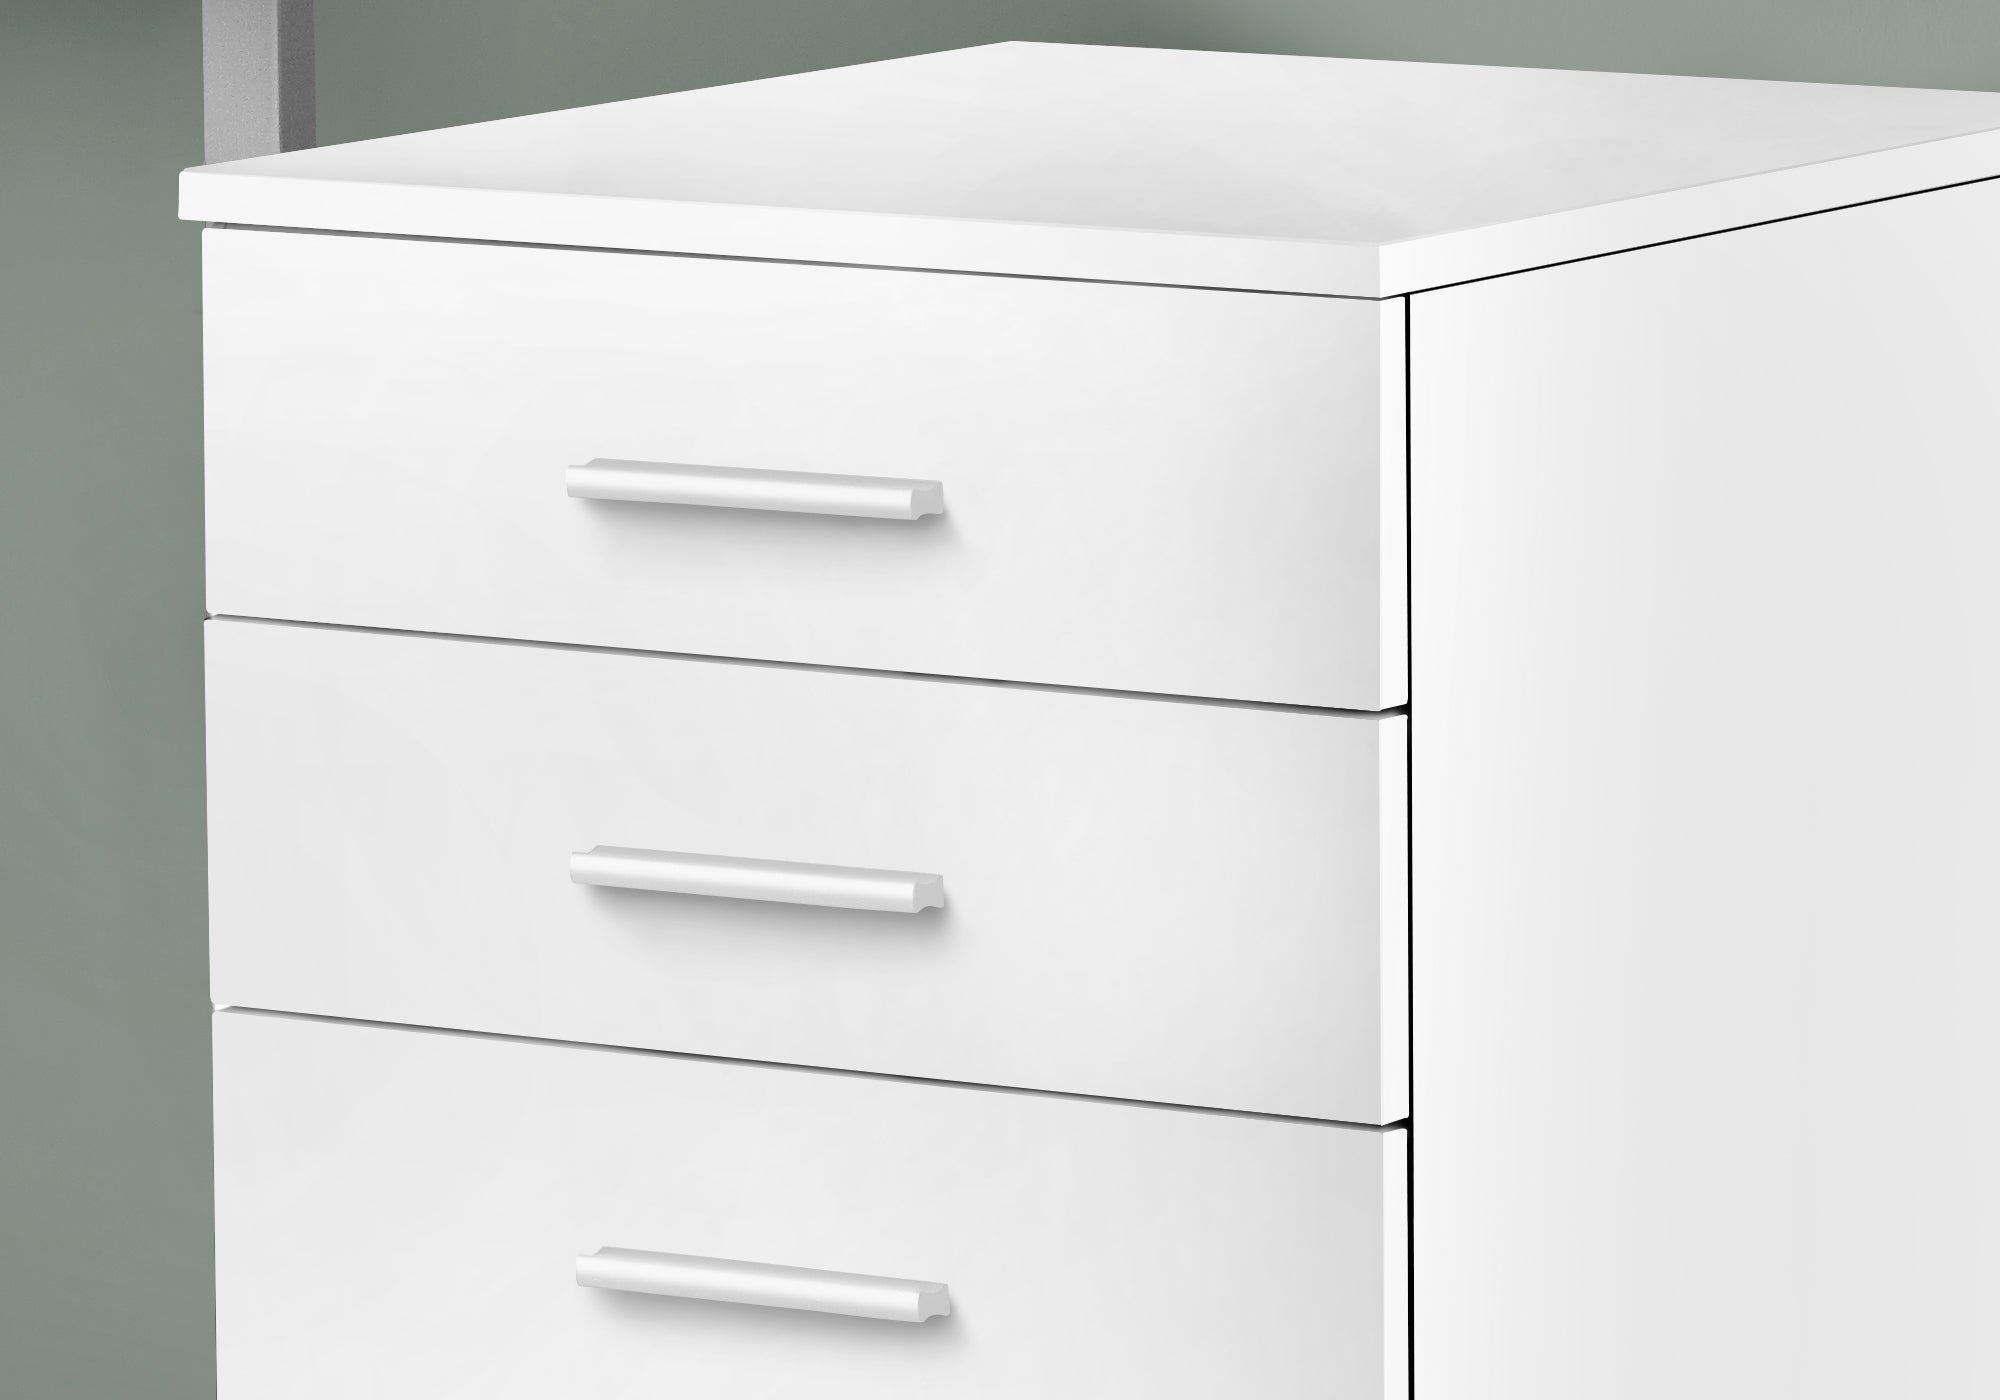 MN-287780    Filing Cabinet - 3 Storage Drawers / 2 Locking Casters - 24"H - White